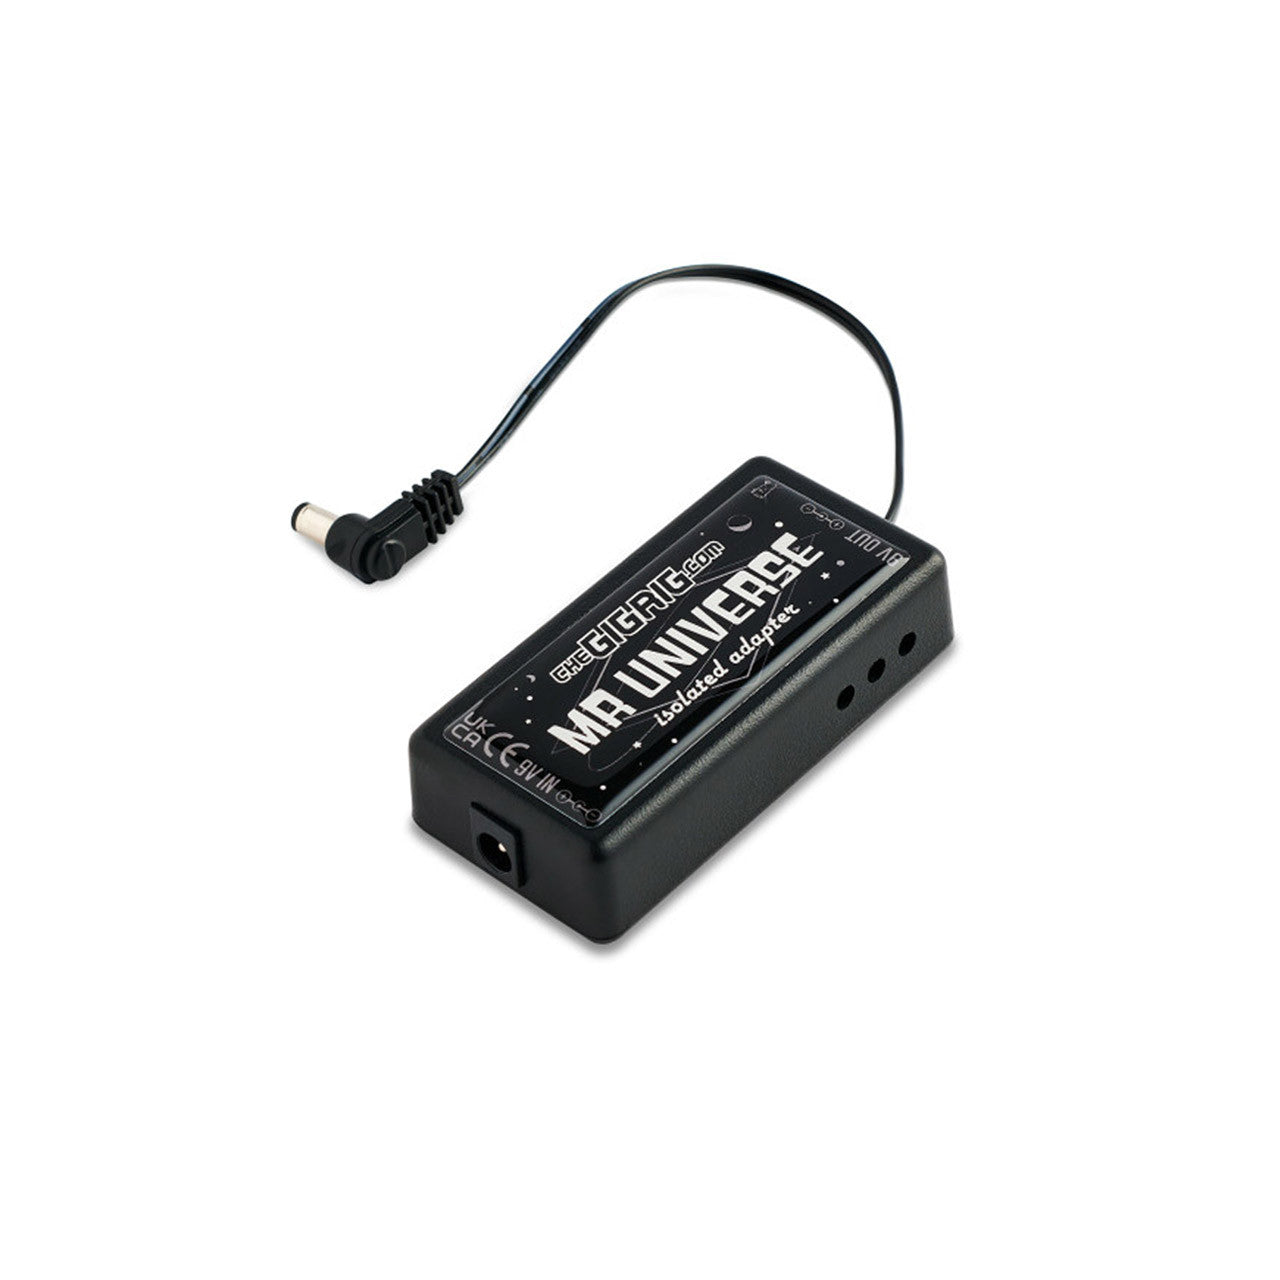 USB DC 5V an 9V 5,5 mm x 2,1 mm DC Stecker Stecker Stromkabel